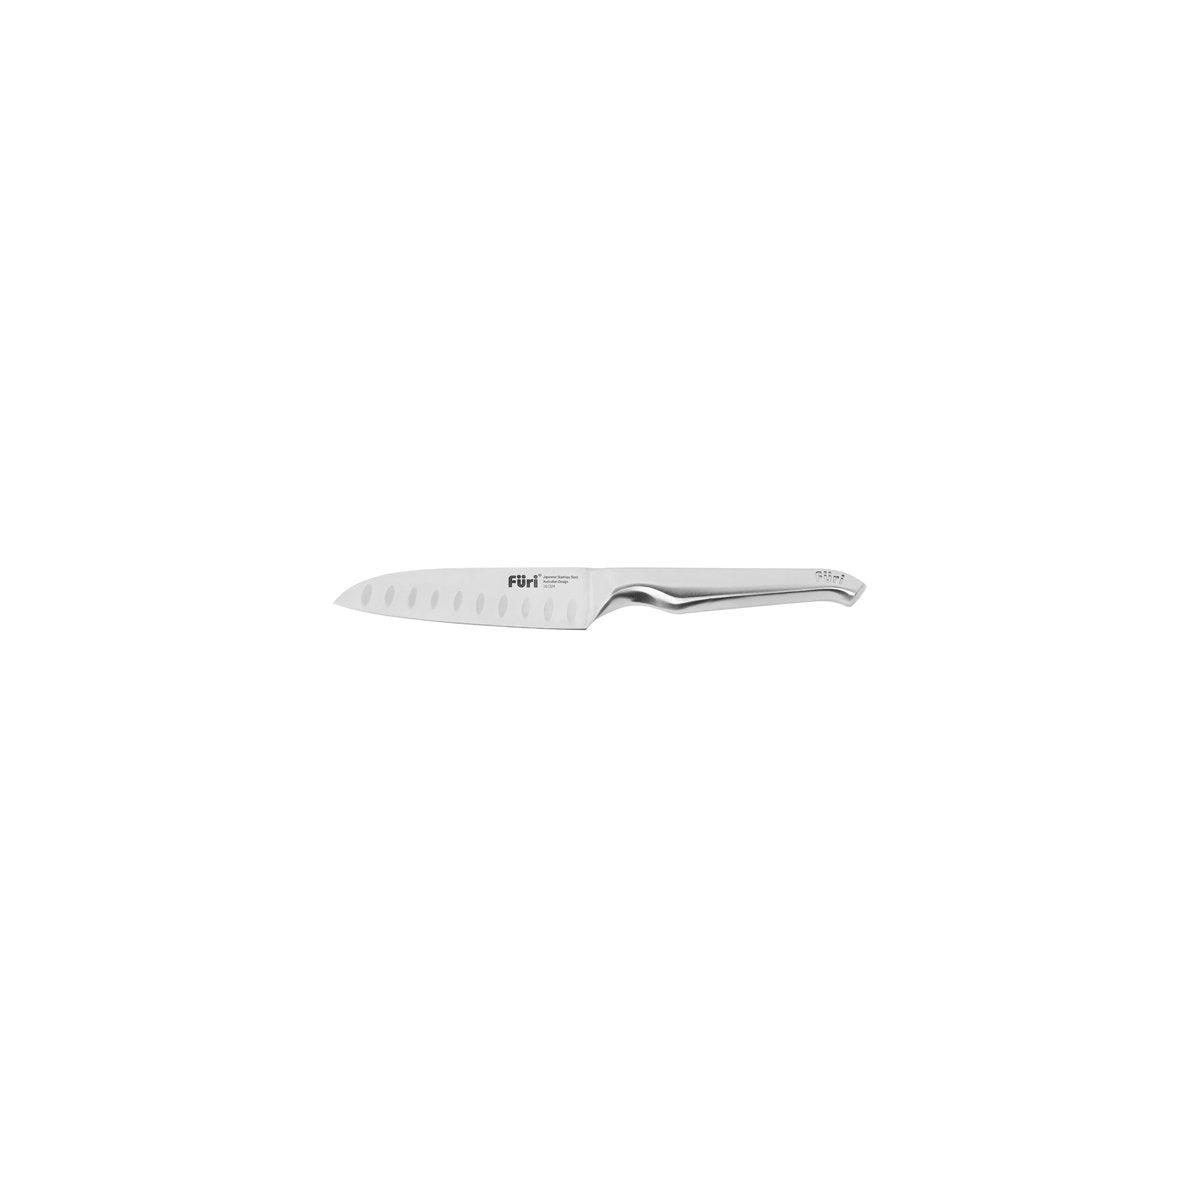 27181 Furi Pro Asian Utlity Knife 120mm Tomkin Australia Hospitality Supplies